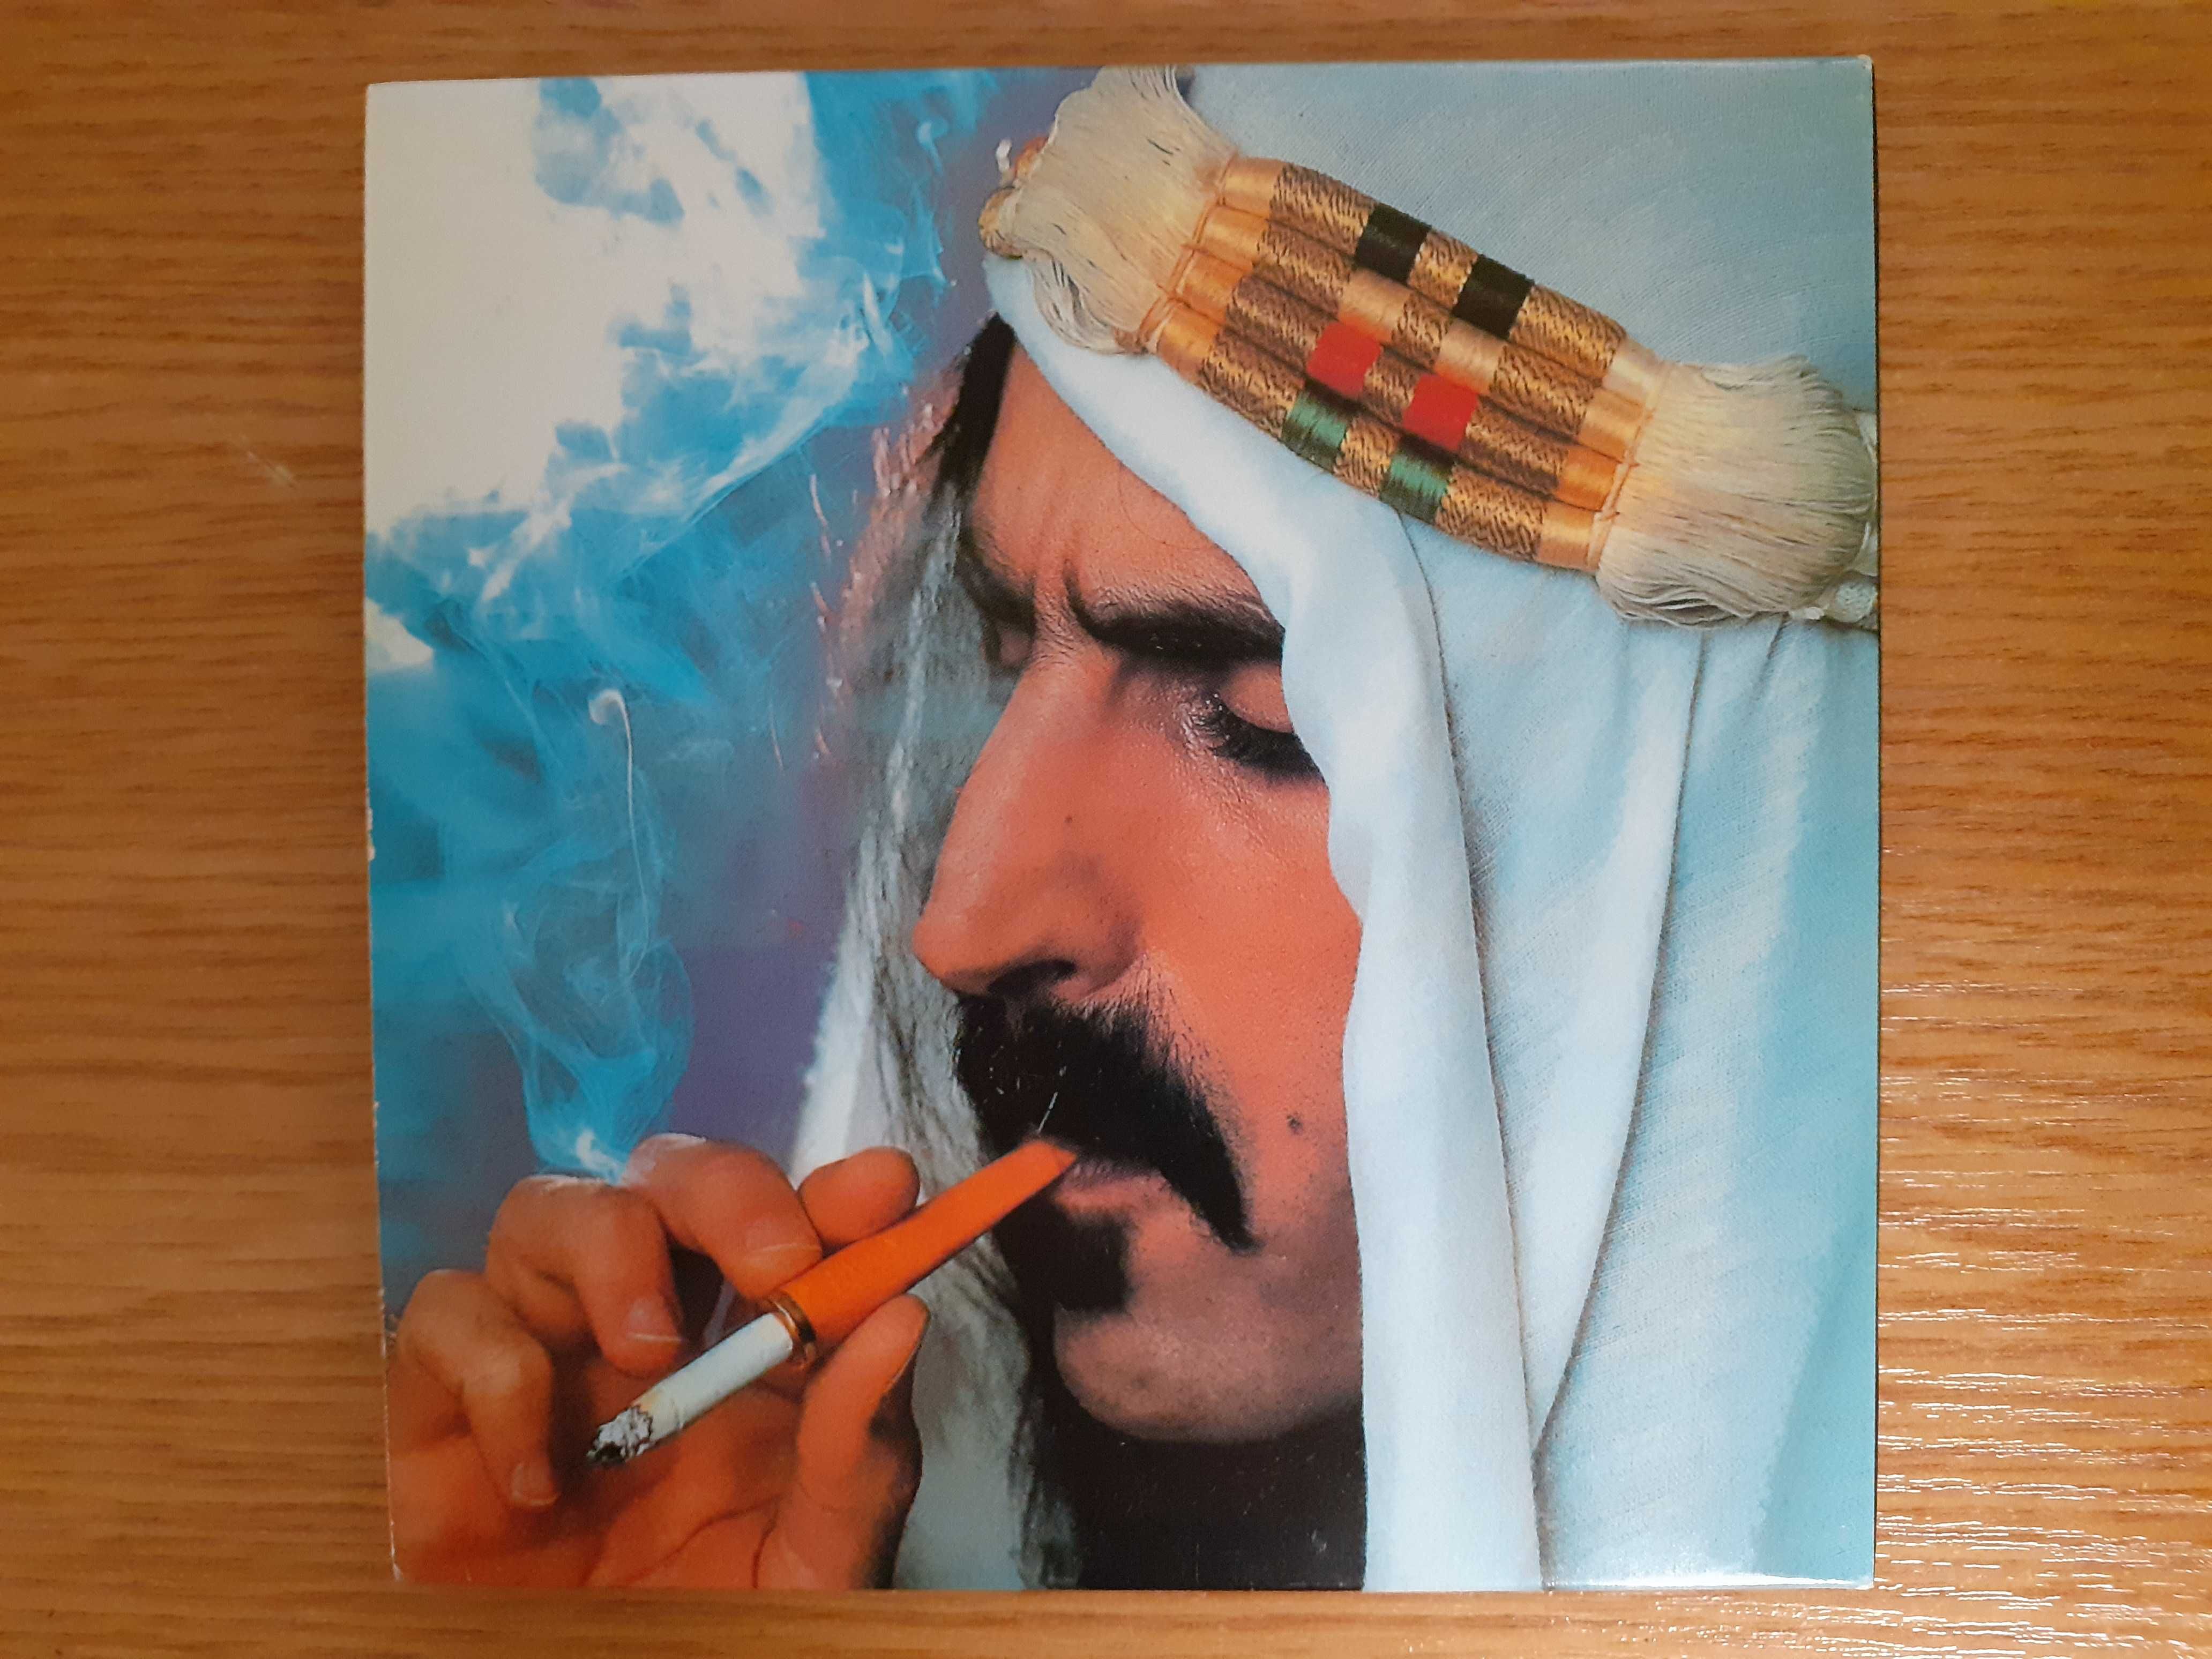 Японский компакт диск CD Frank Zappa ‎– Sheik Yerbouti (Mini LP)